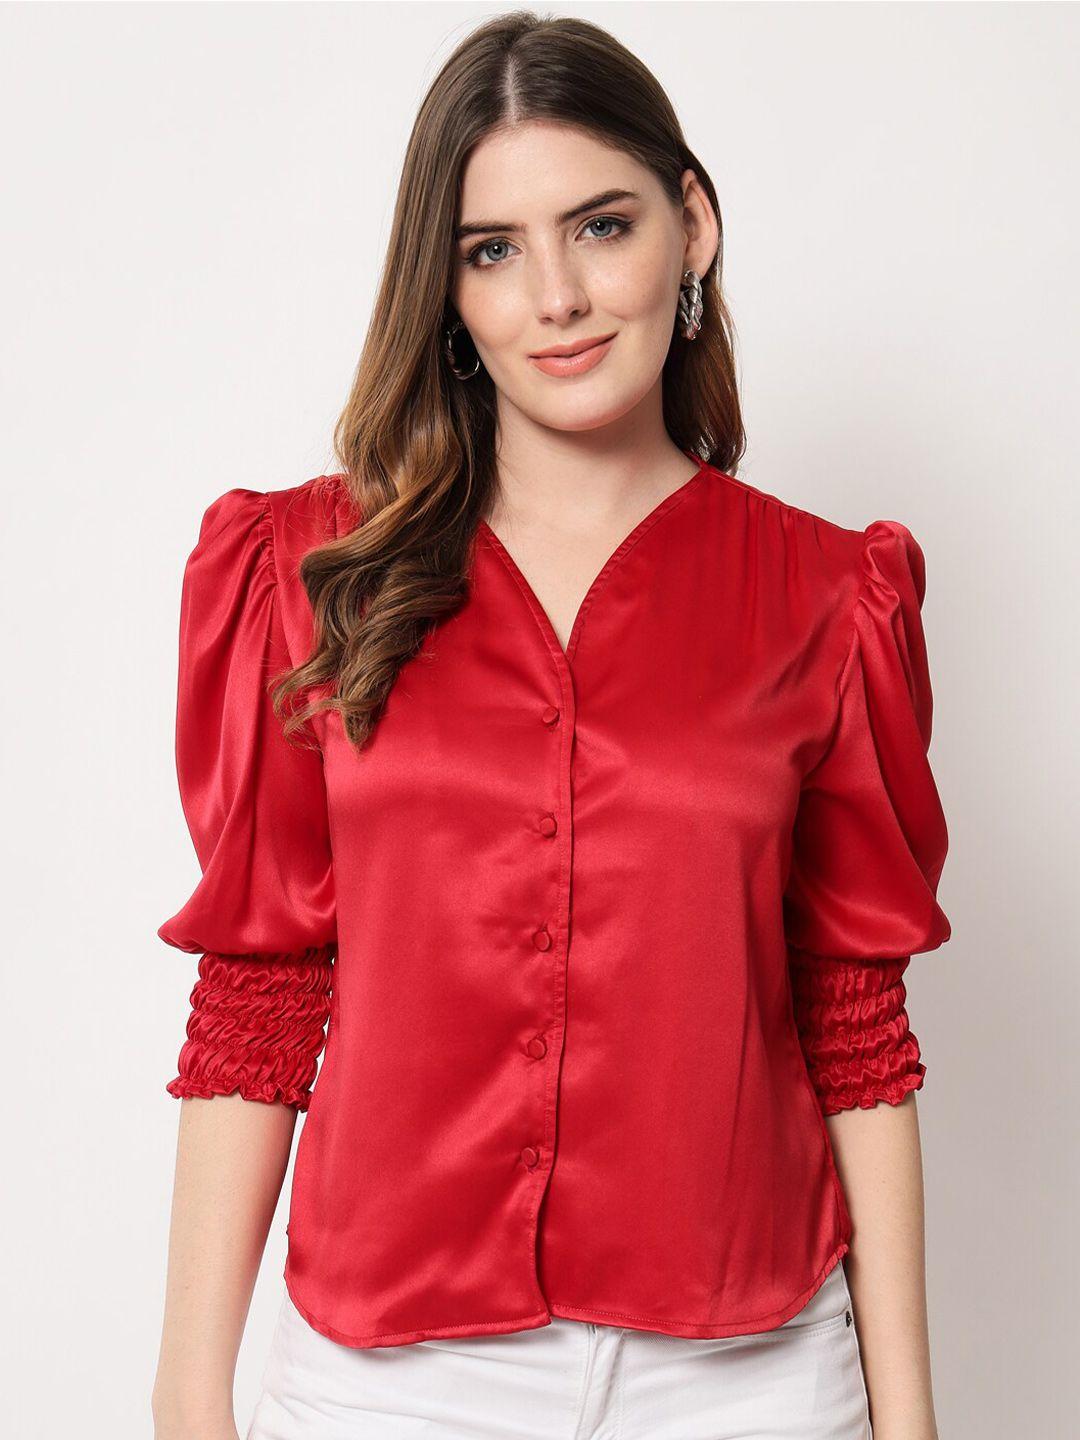 angloindu women red shirt style top